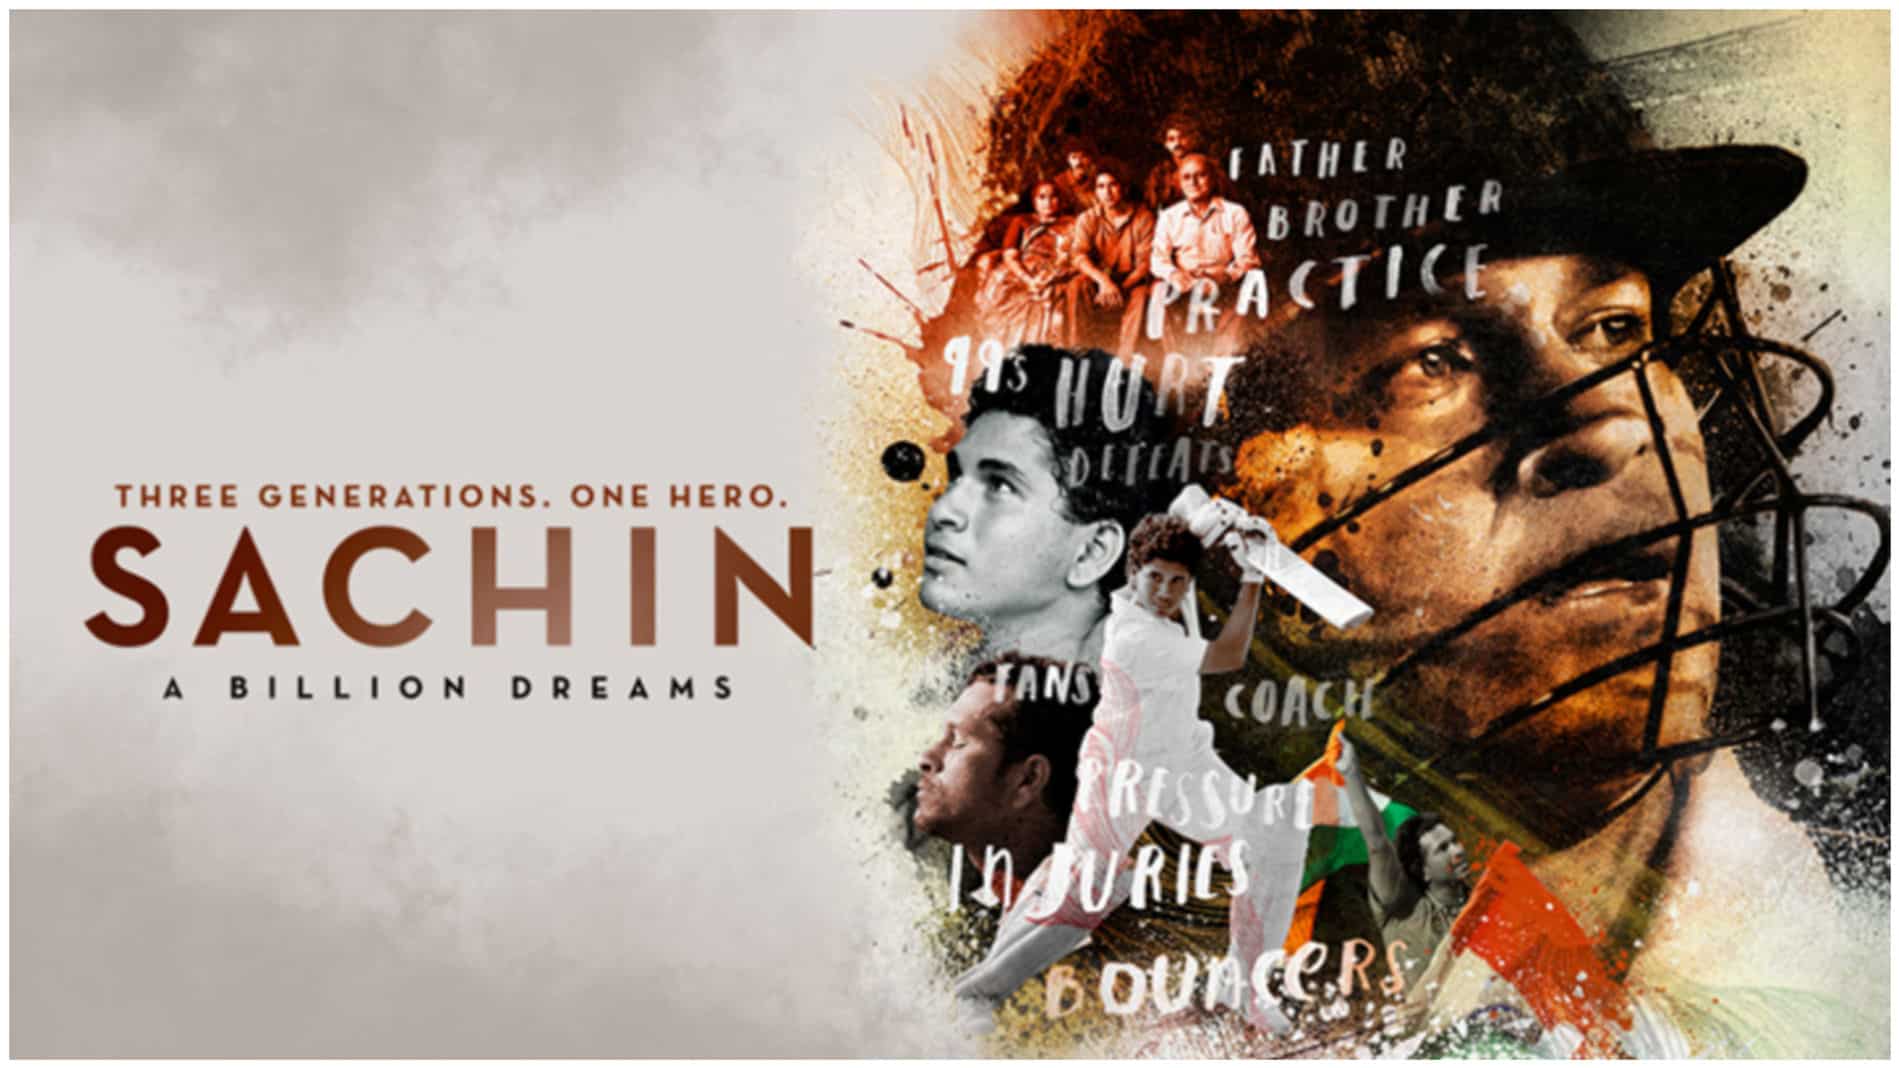 Celebrate Sachin Tendulkar's birthday! Discover where you can stream Sachin: A Billion Dreams on OTT